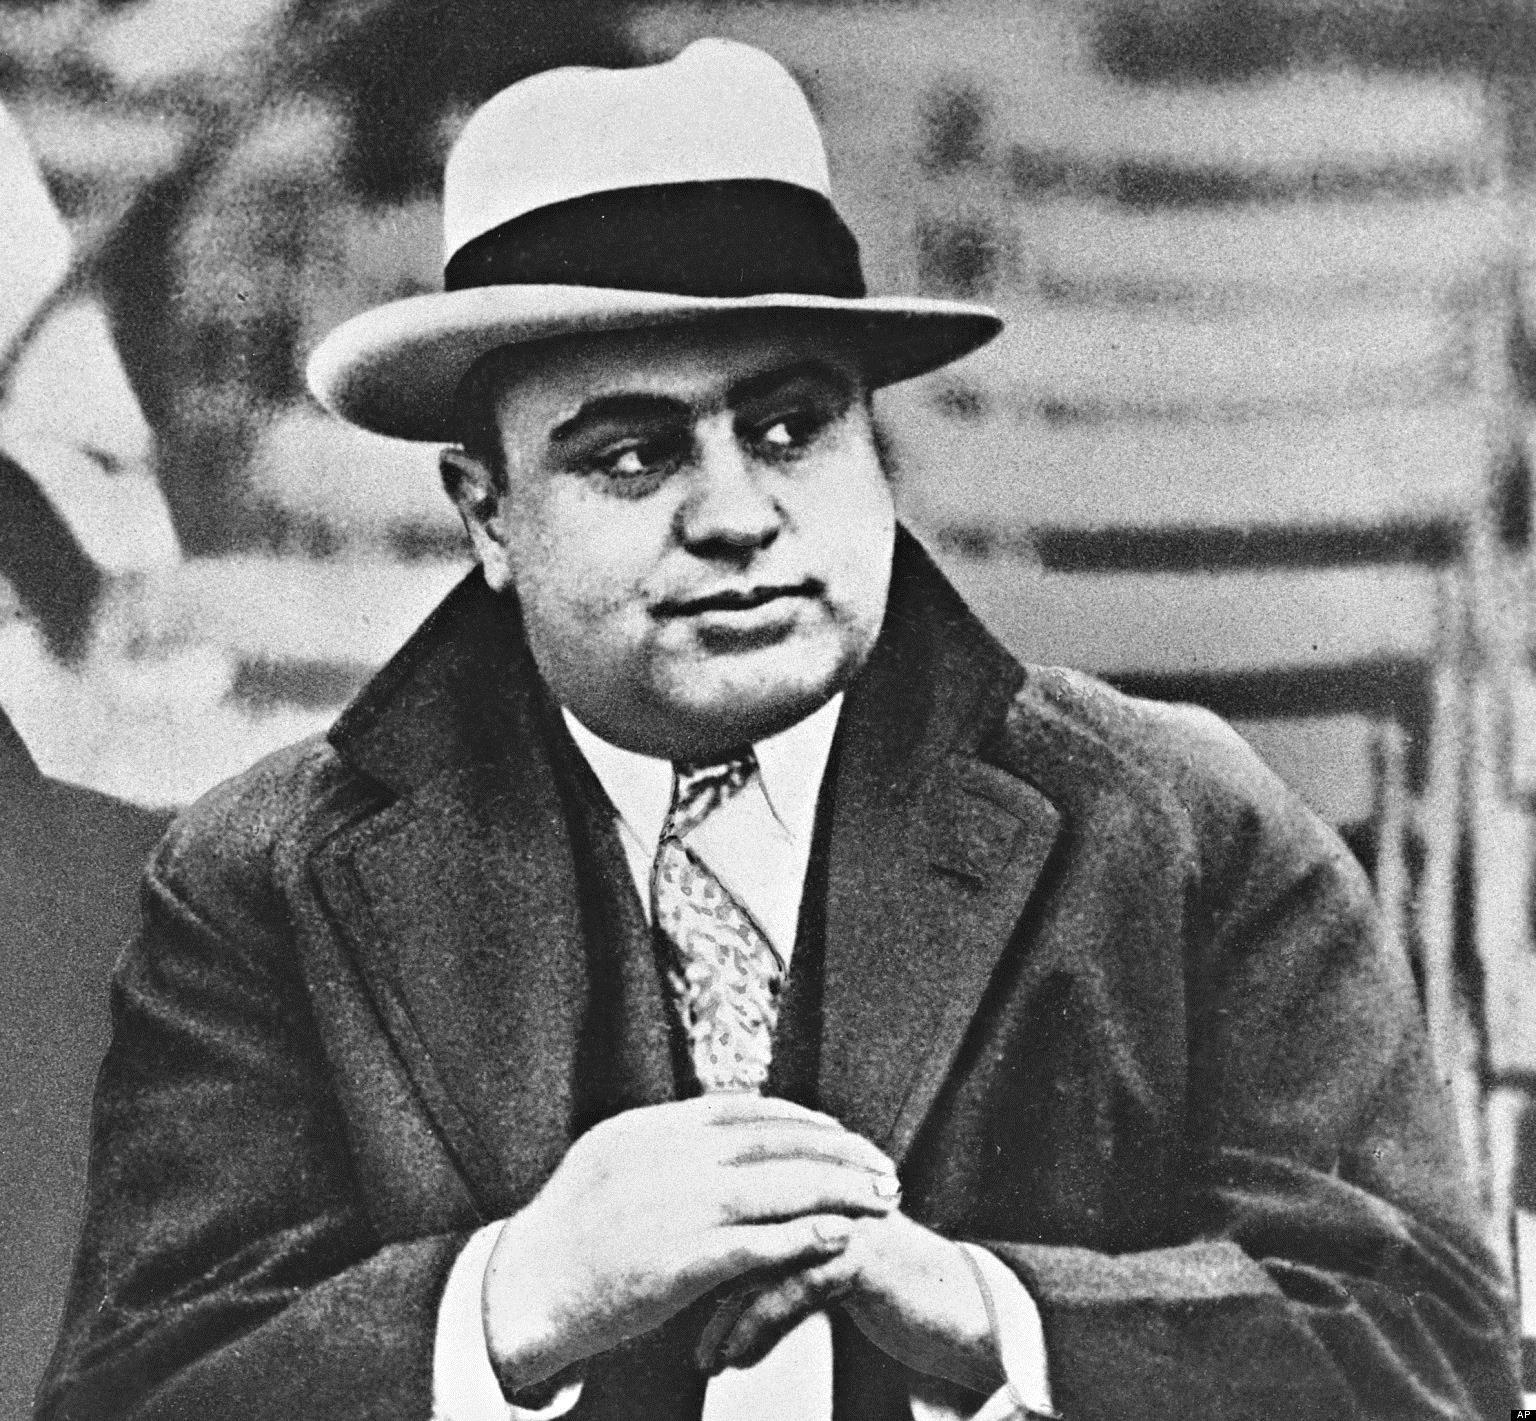 A 1931 photograph of Al "Snorky" Capone.